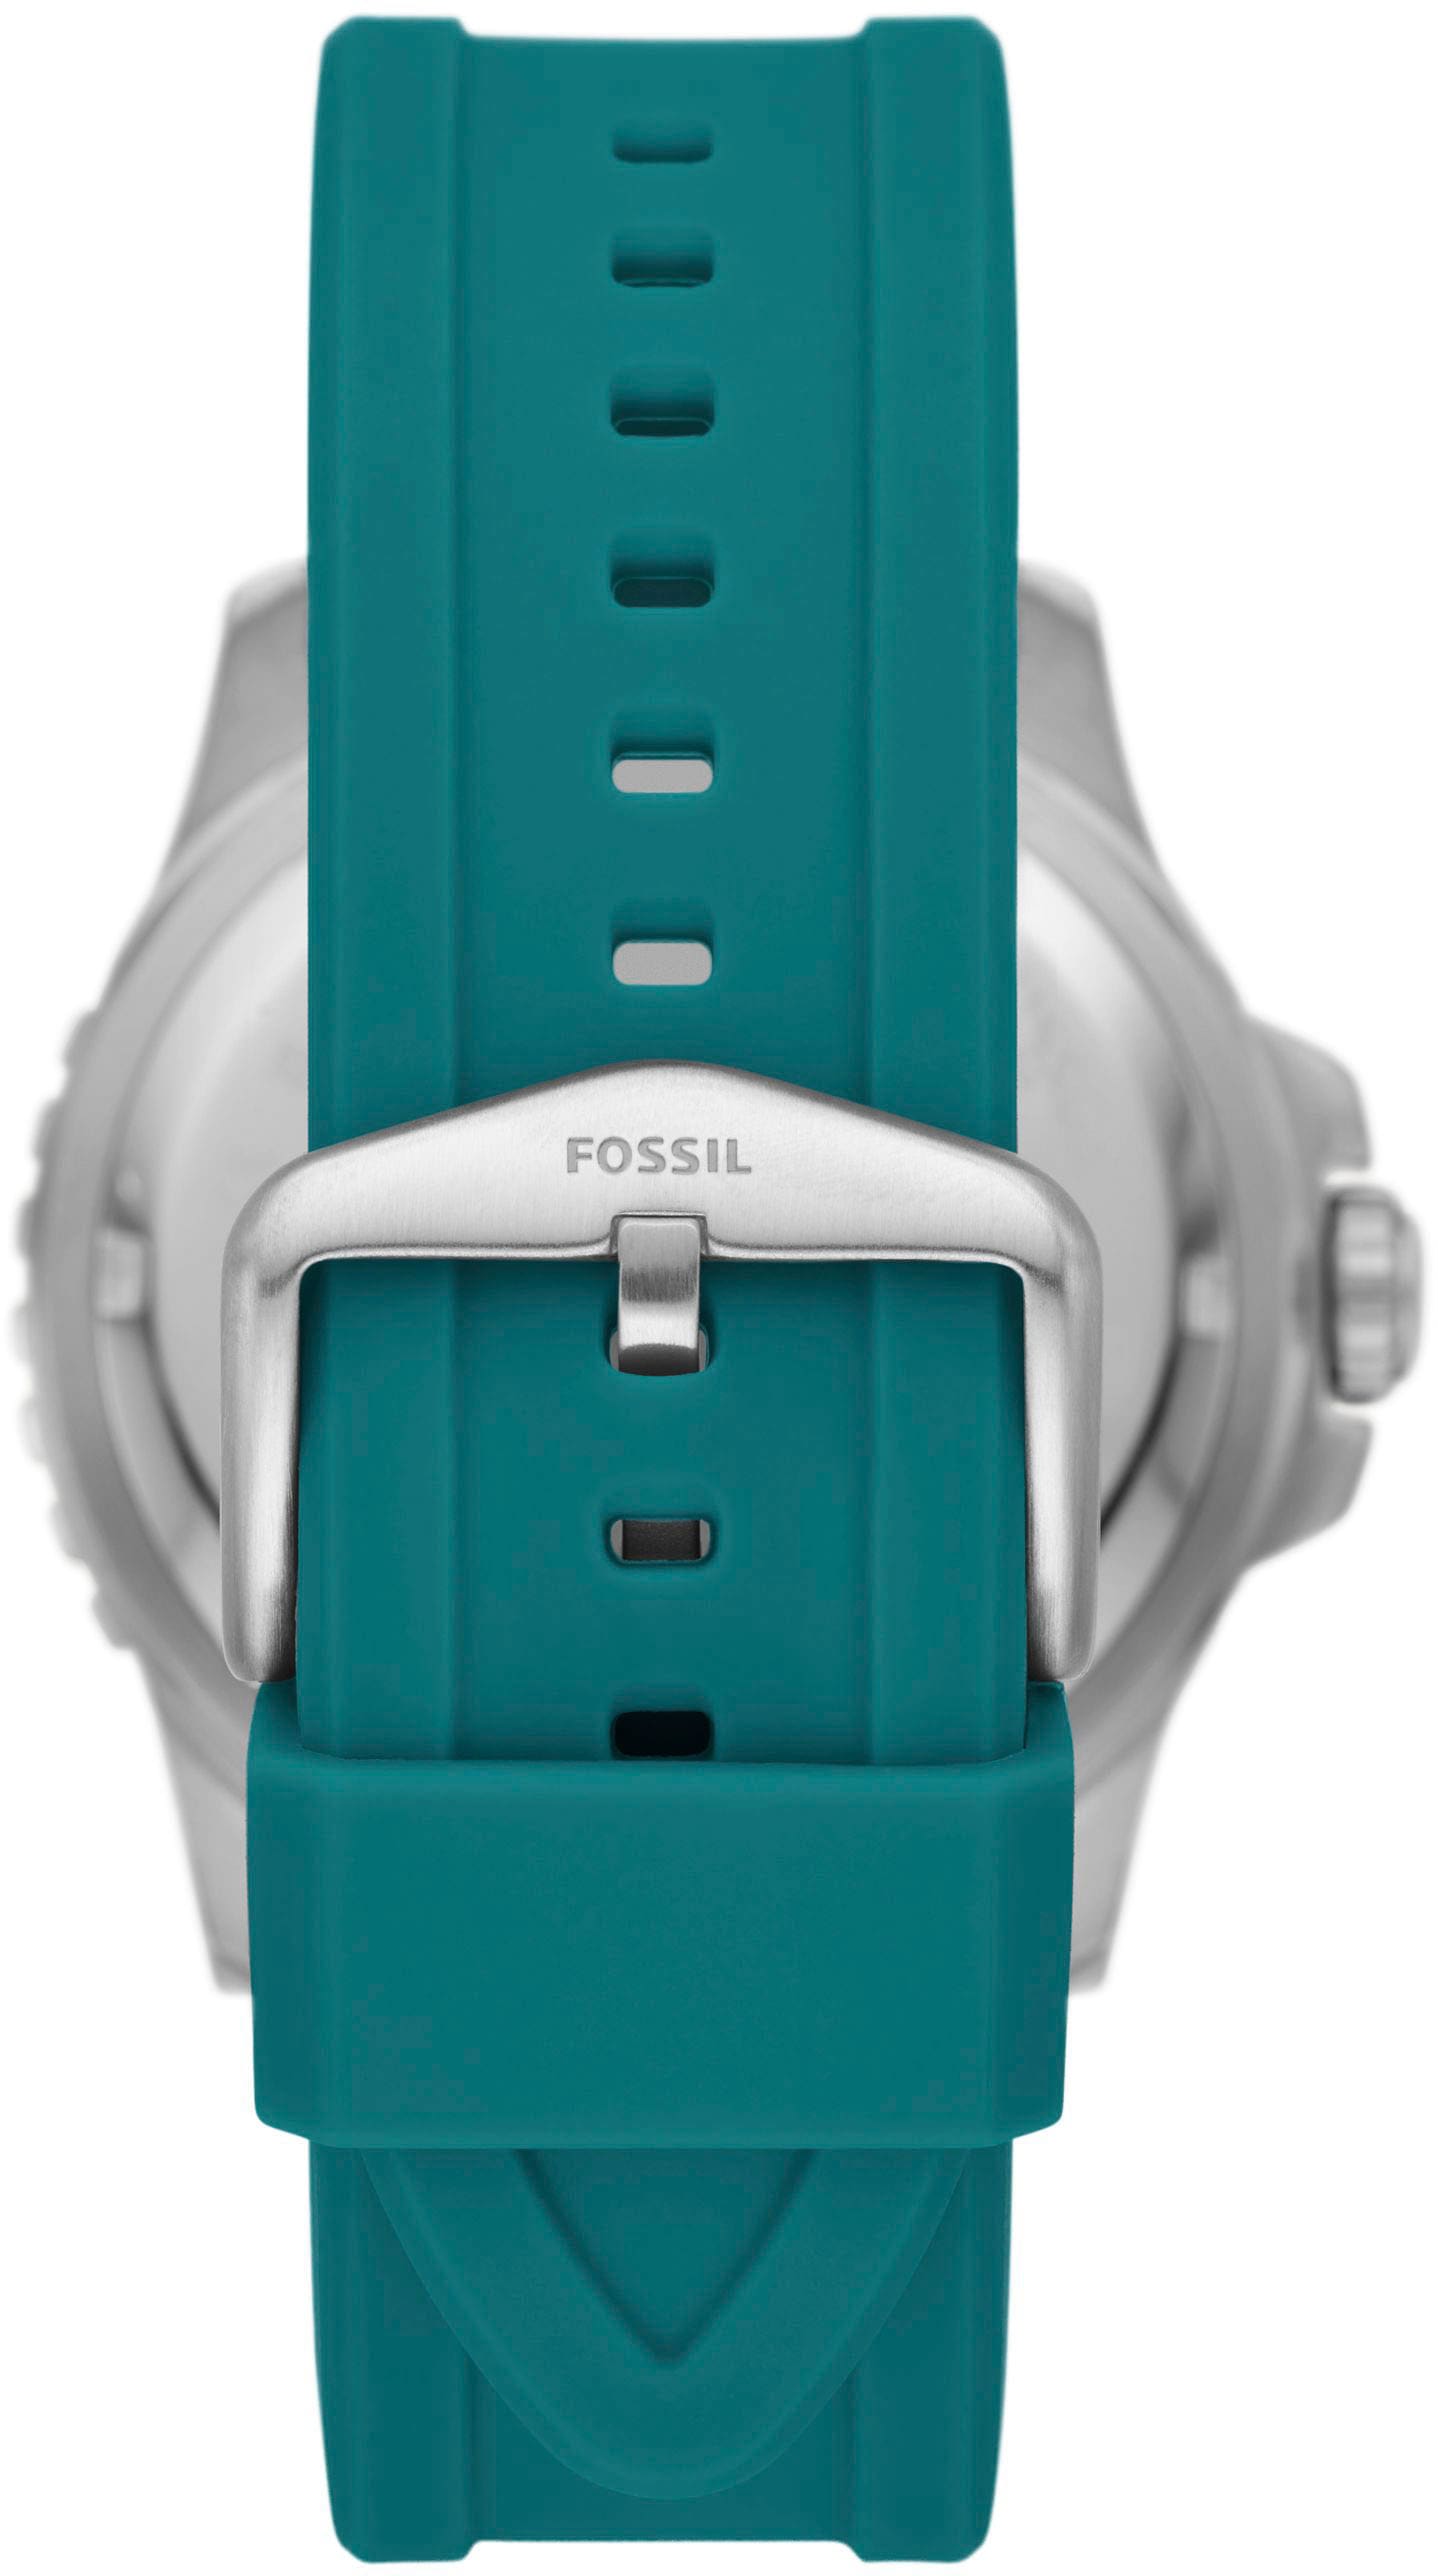 Fossil Quarzuhr »FOSSIL BLUE GMT, FS5992«, Armbanduhr, Damenuhr, Datum, Silikonarmband, bis 10 bar wasserdicht